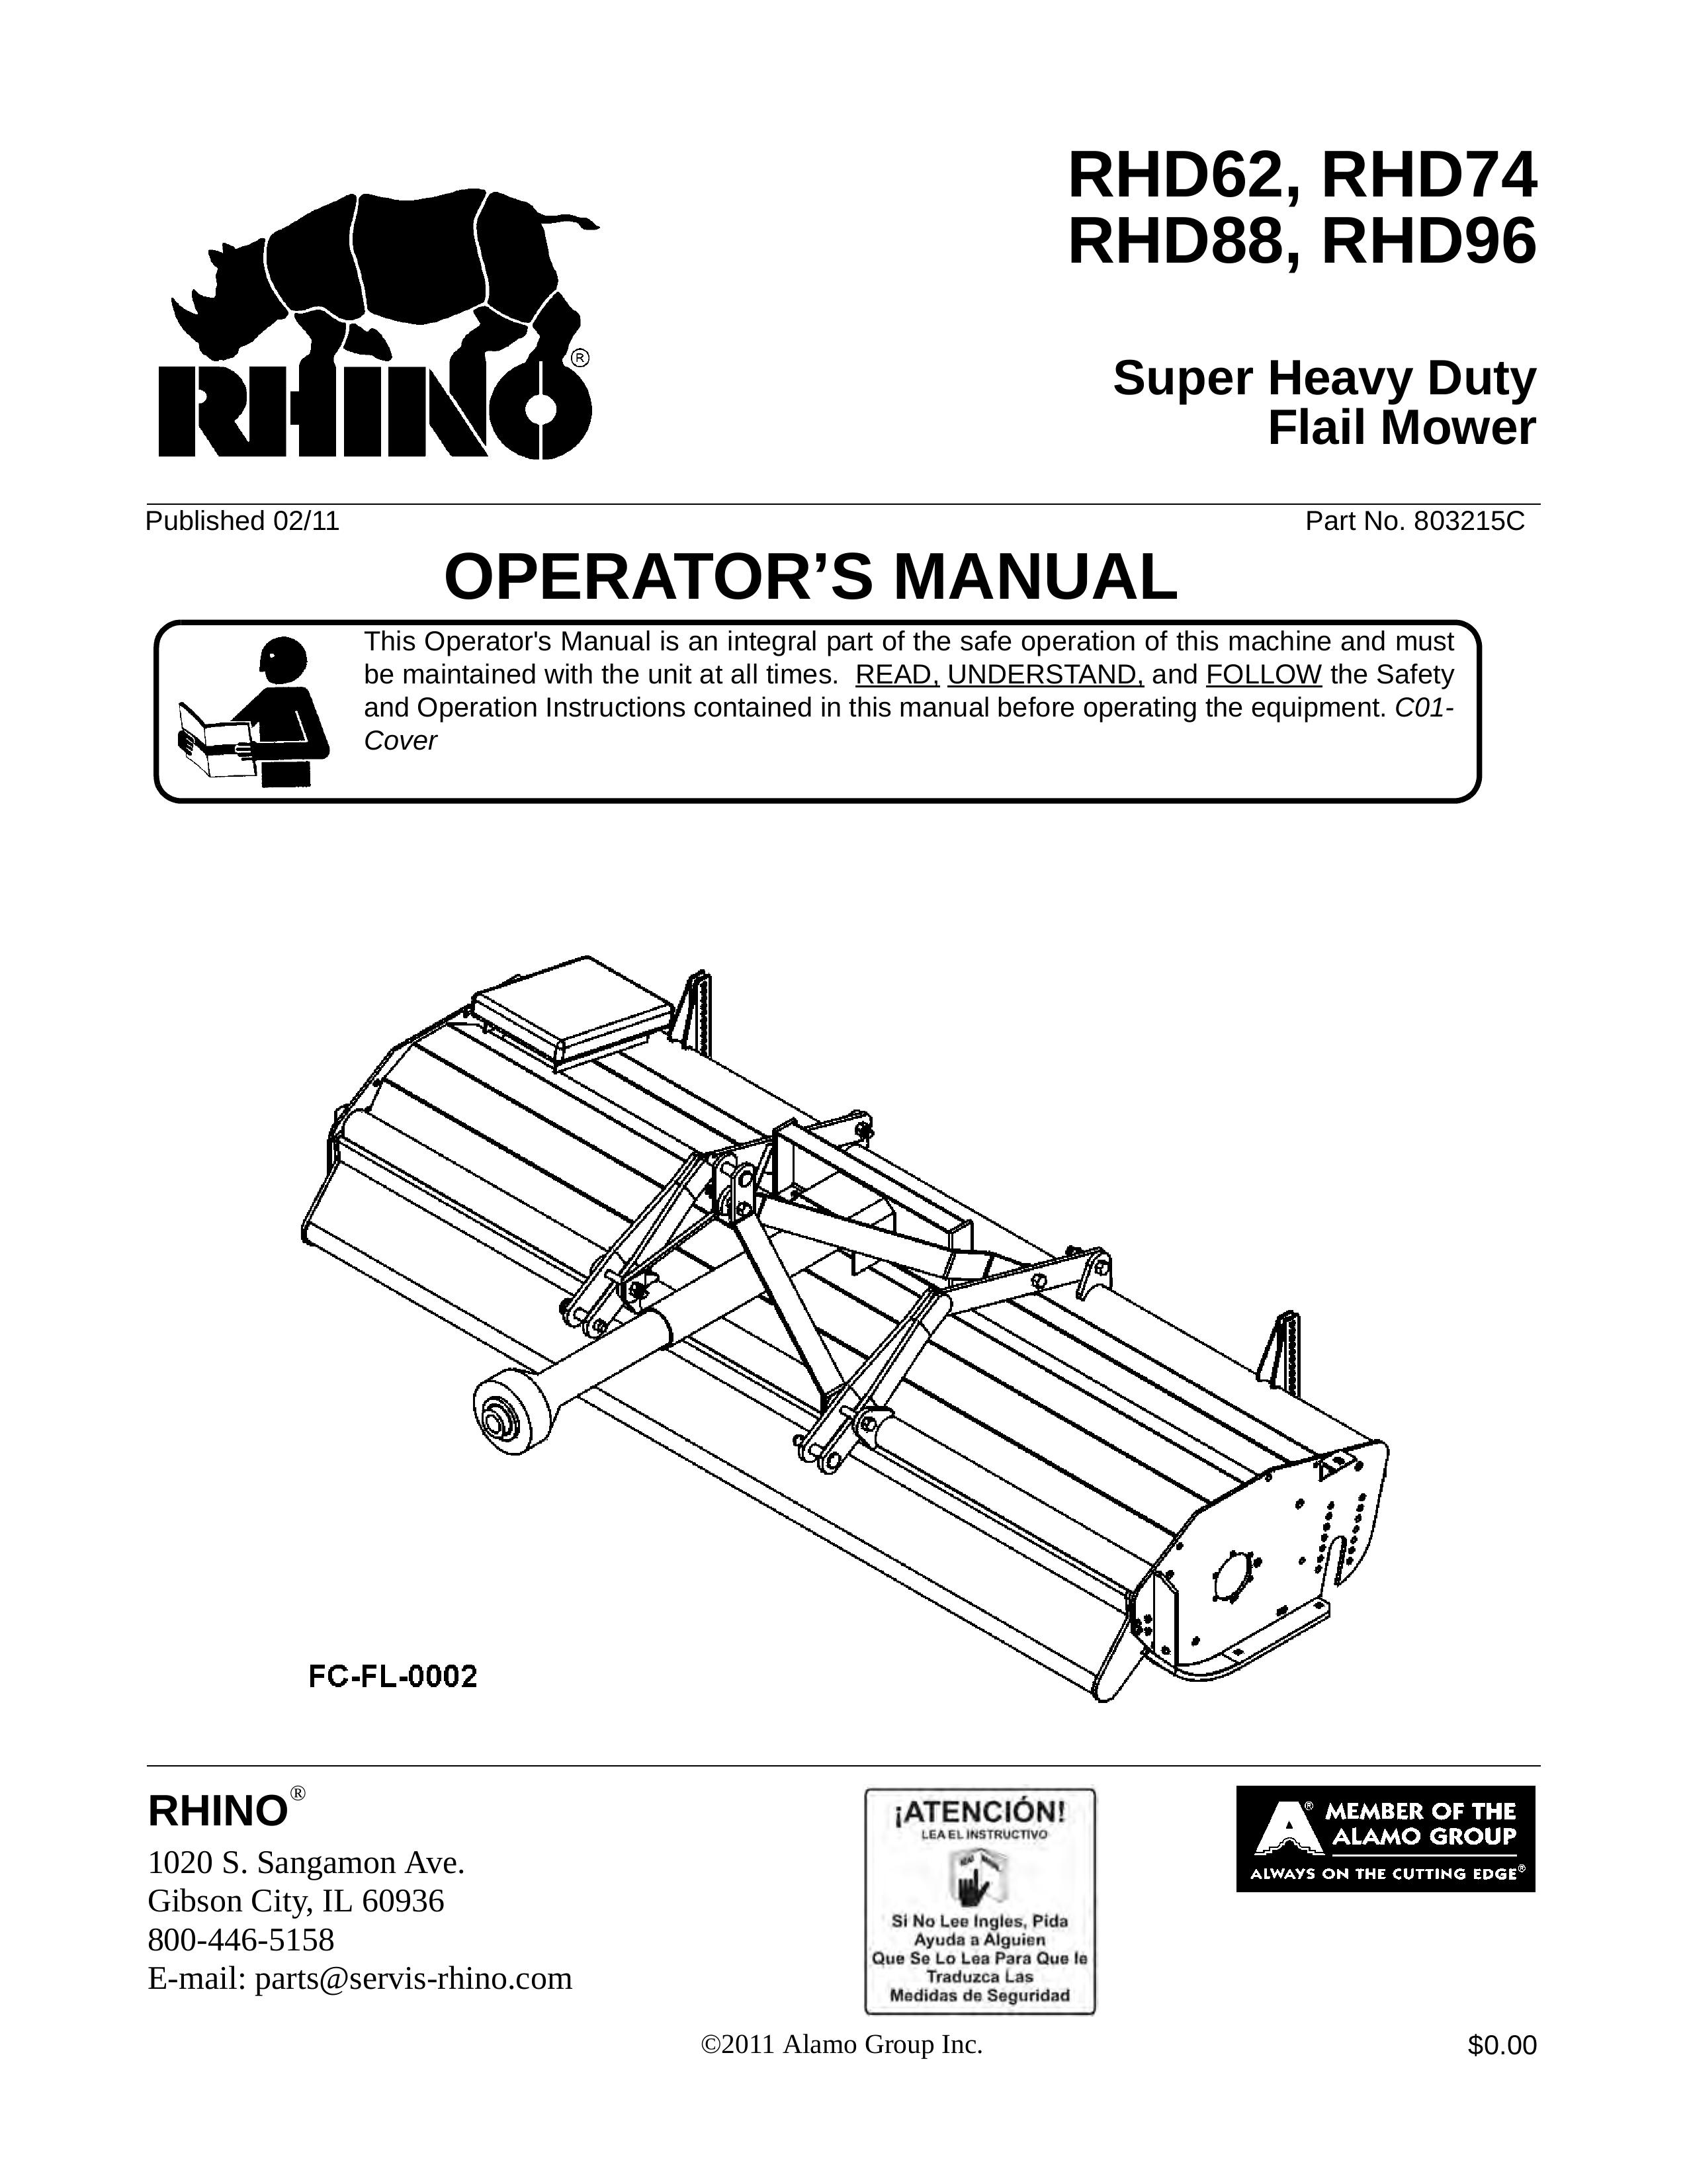 Rhino Mounts RHD74 Lawn Mower User Manual